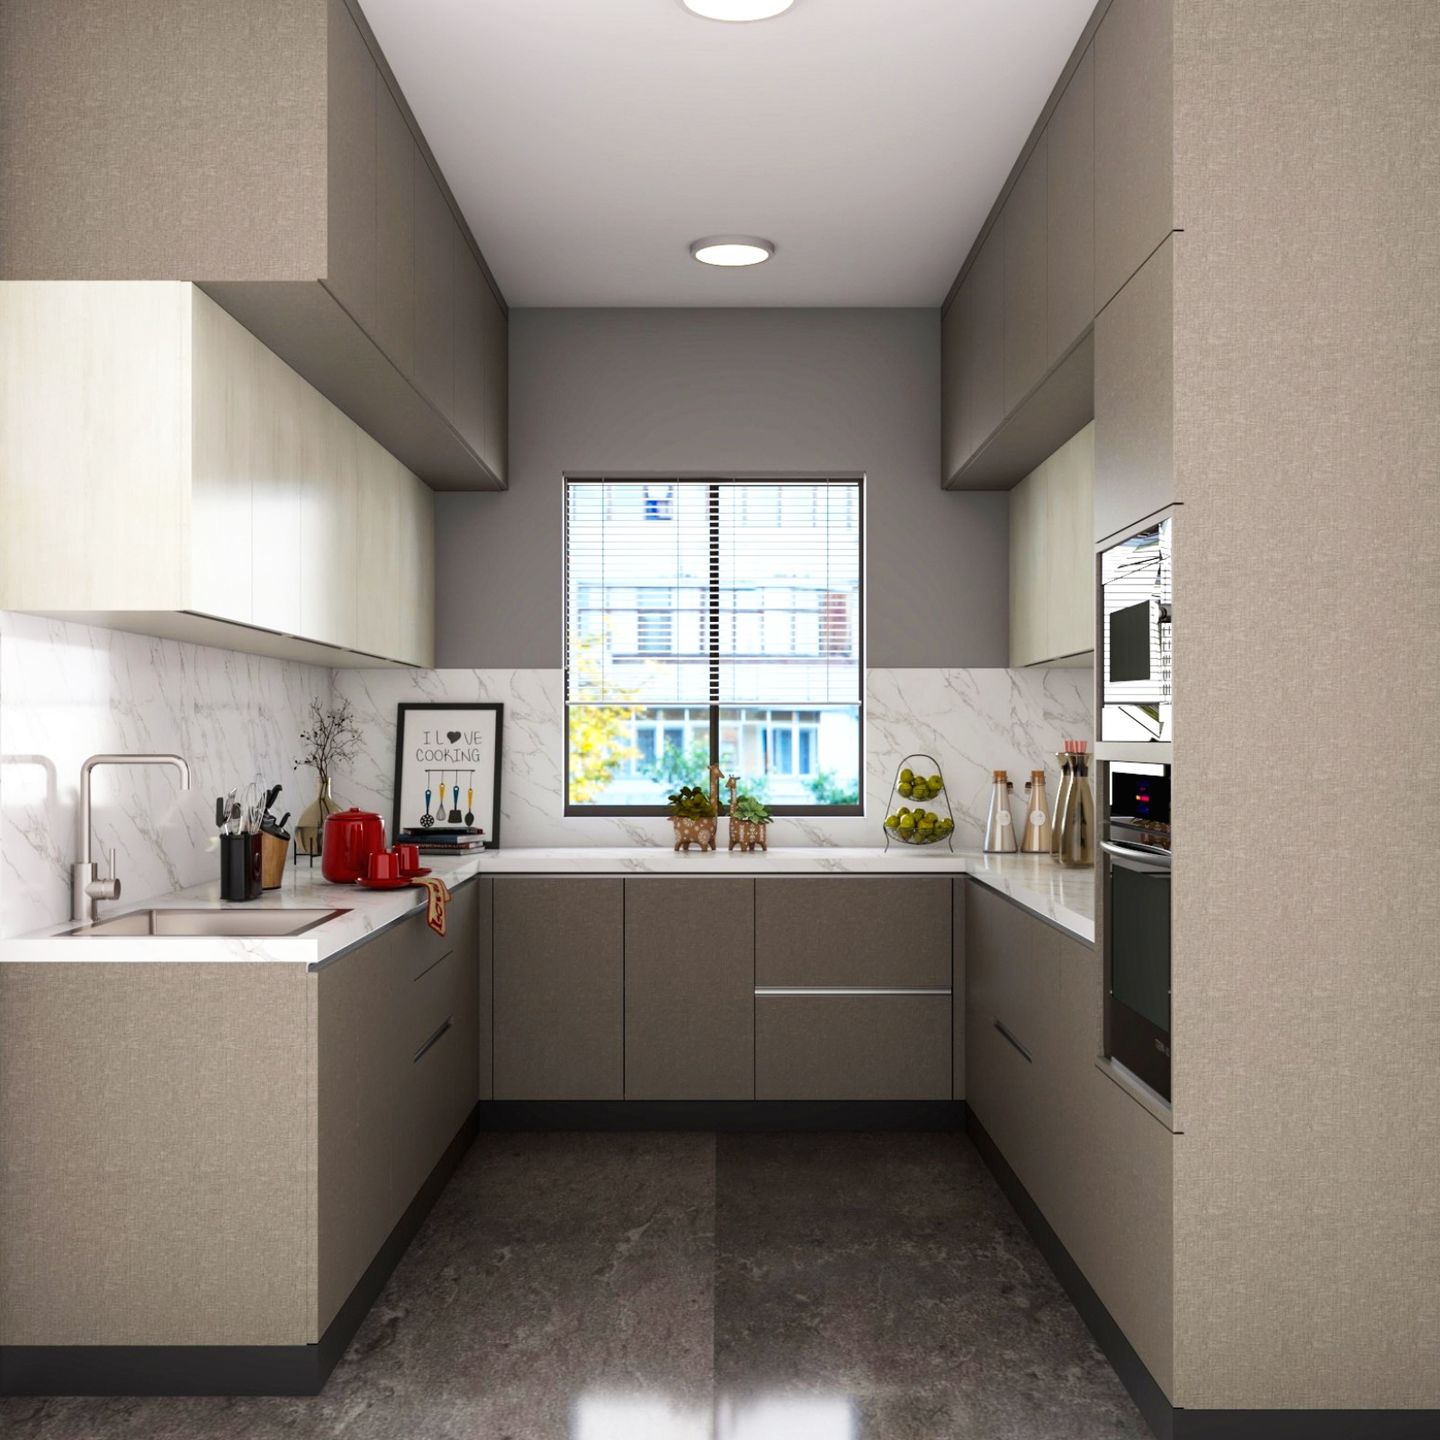 Parallel Kitchen Design With Beige Cabinets - Livspace